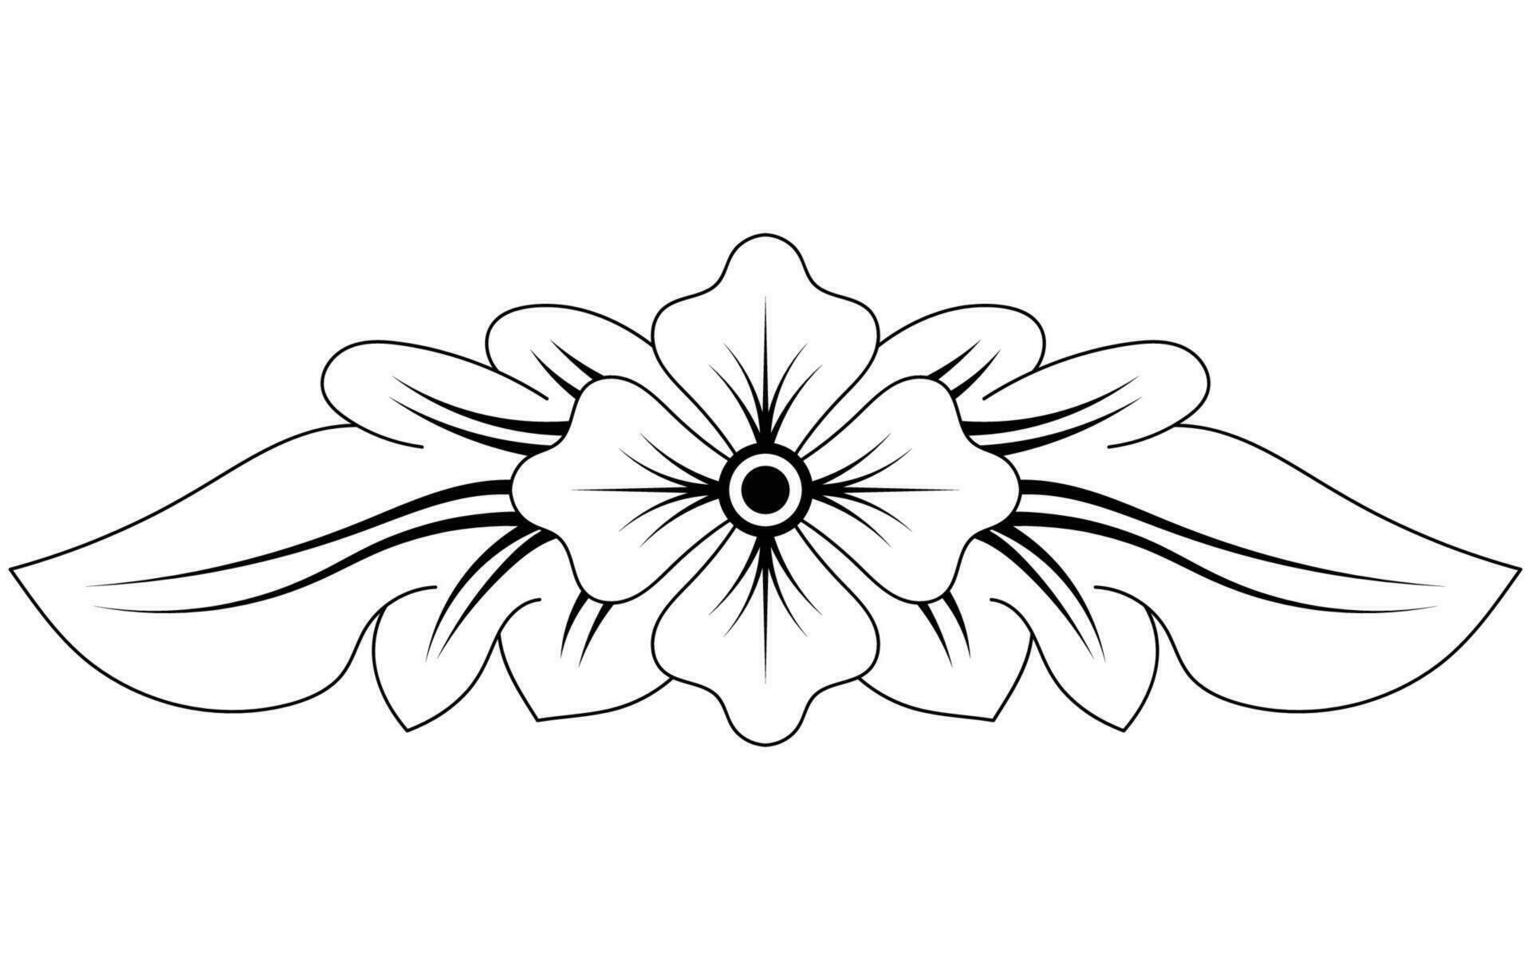 negro línea. floral Clásico filigrana. decorativo florido motivo grabado vector